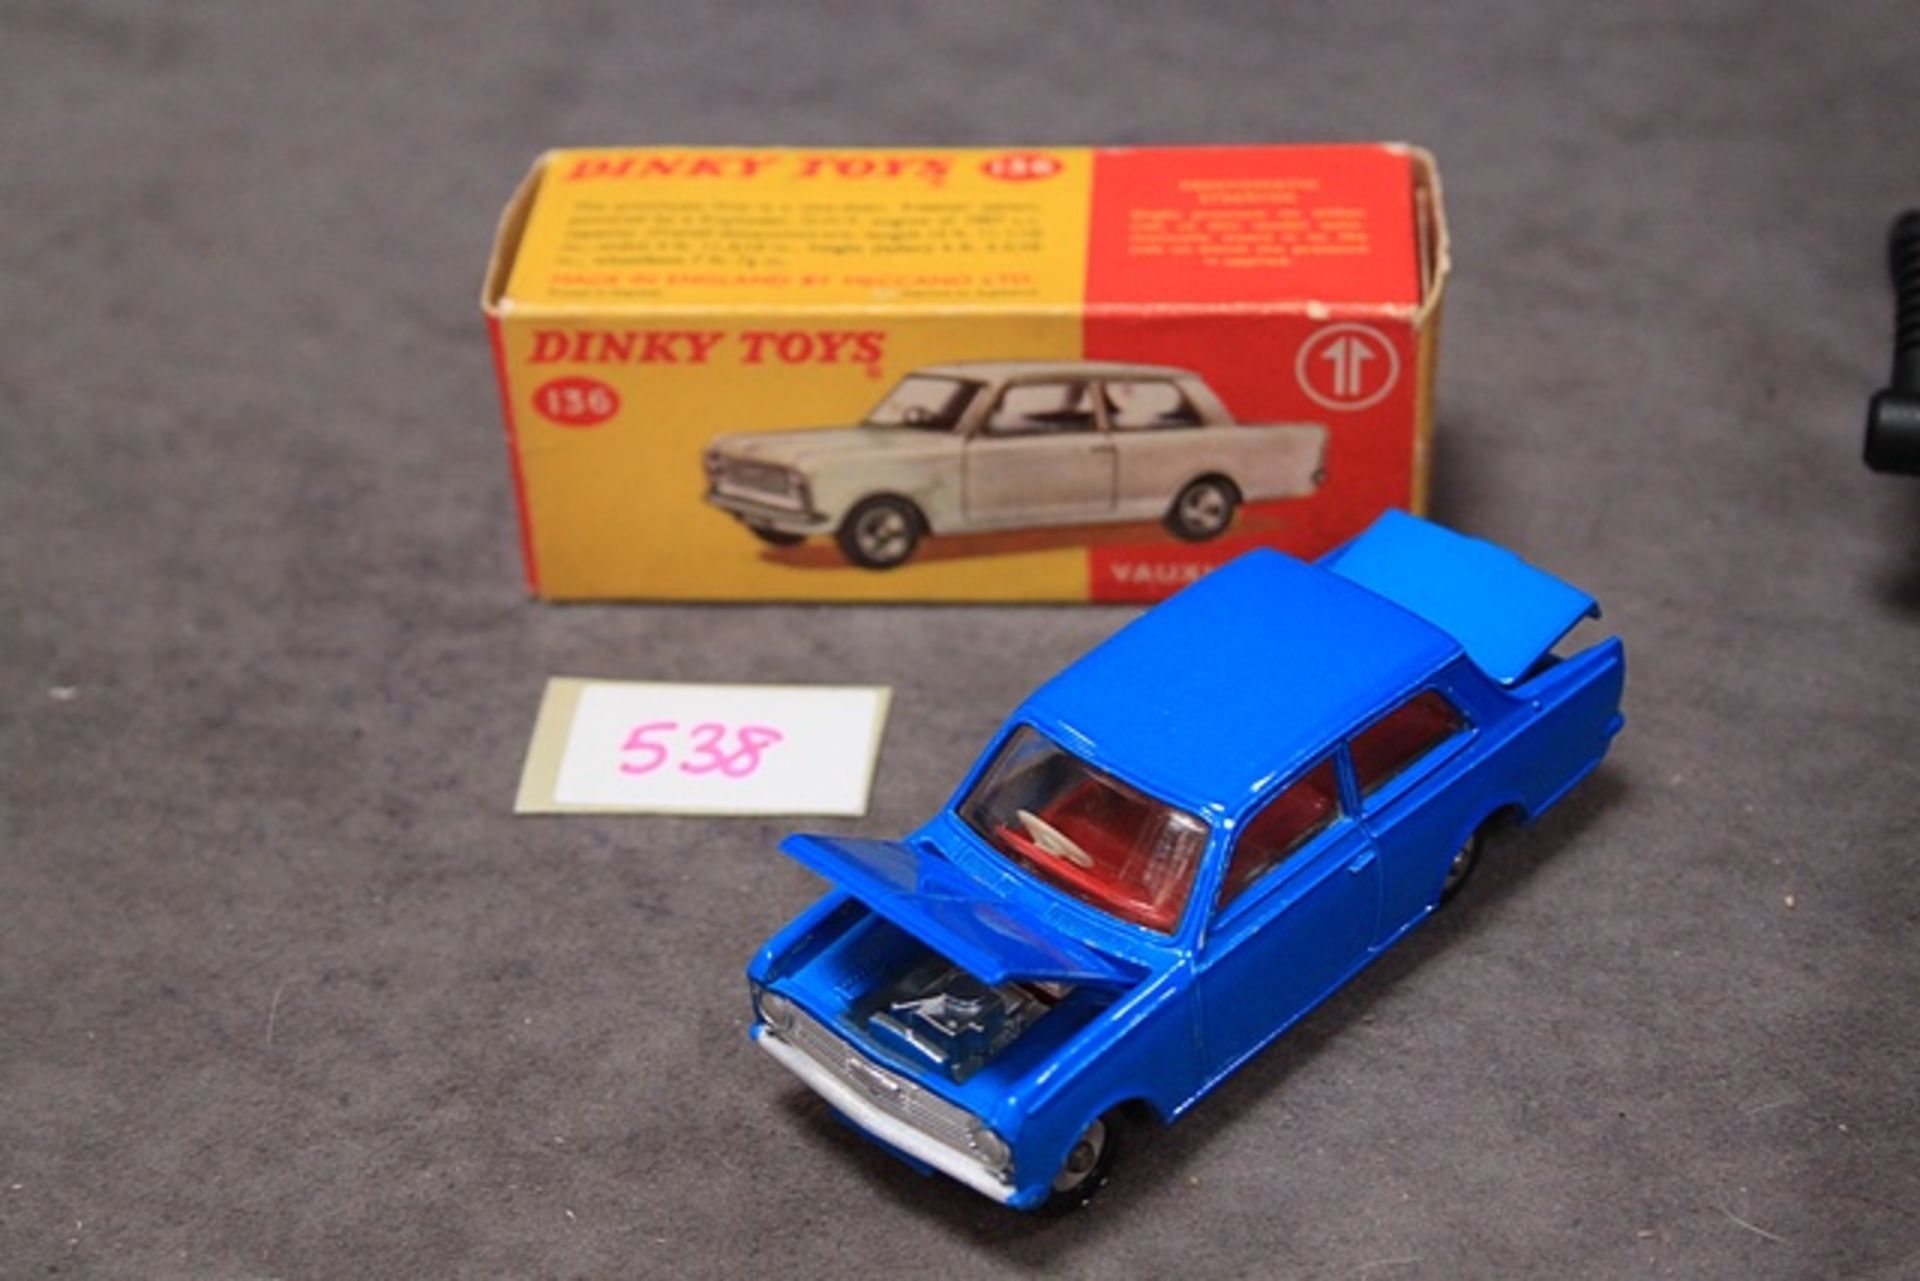 Rare Model Virtually Mint (slight box rub) Dinky Toys Diecast #136 Vauxhall Viva in dark blue with